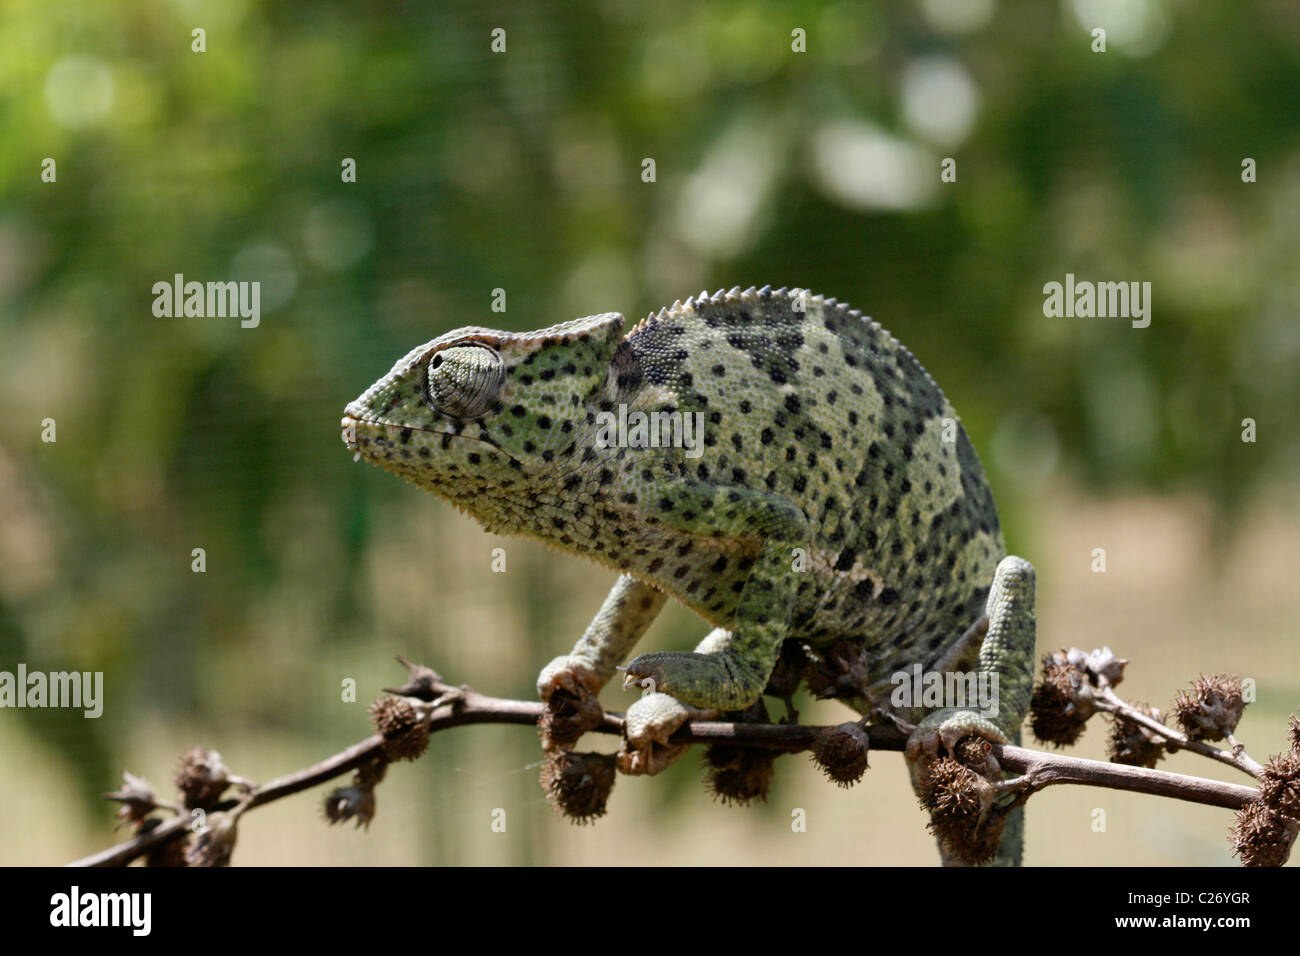 Chameleon on a twig, Uganda Stock Photo